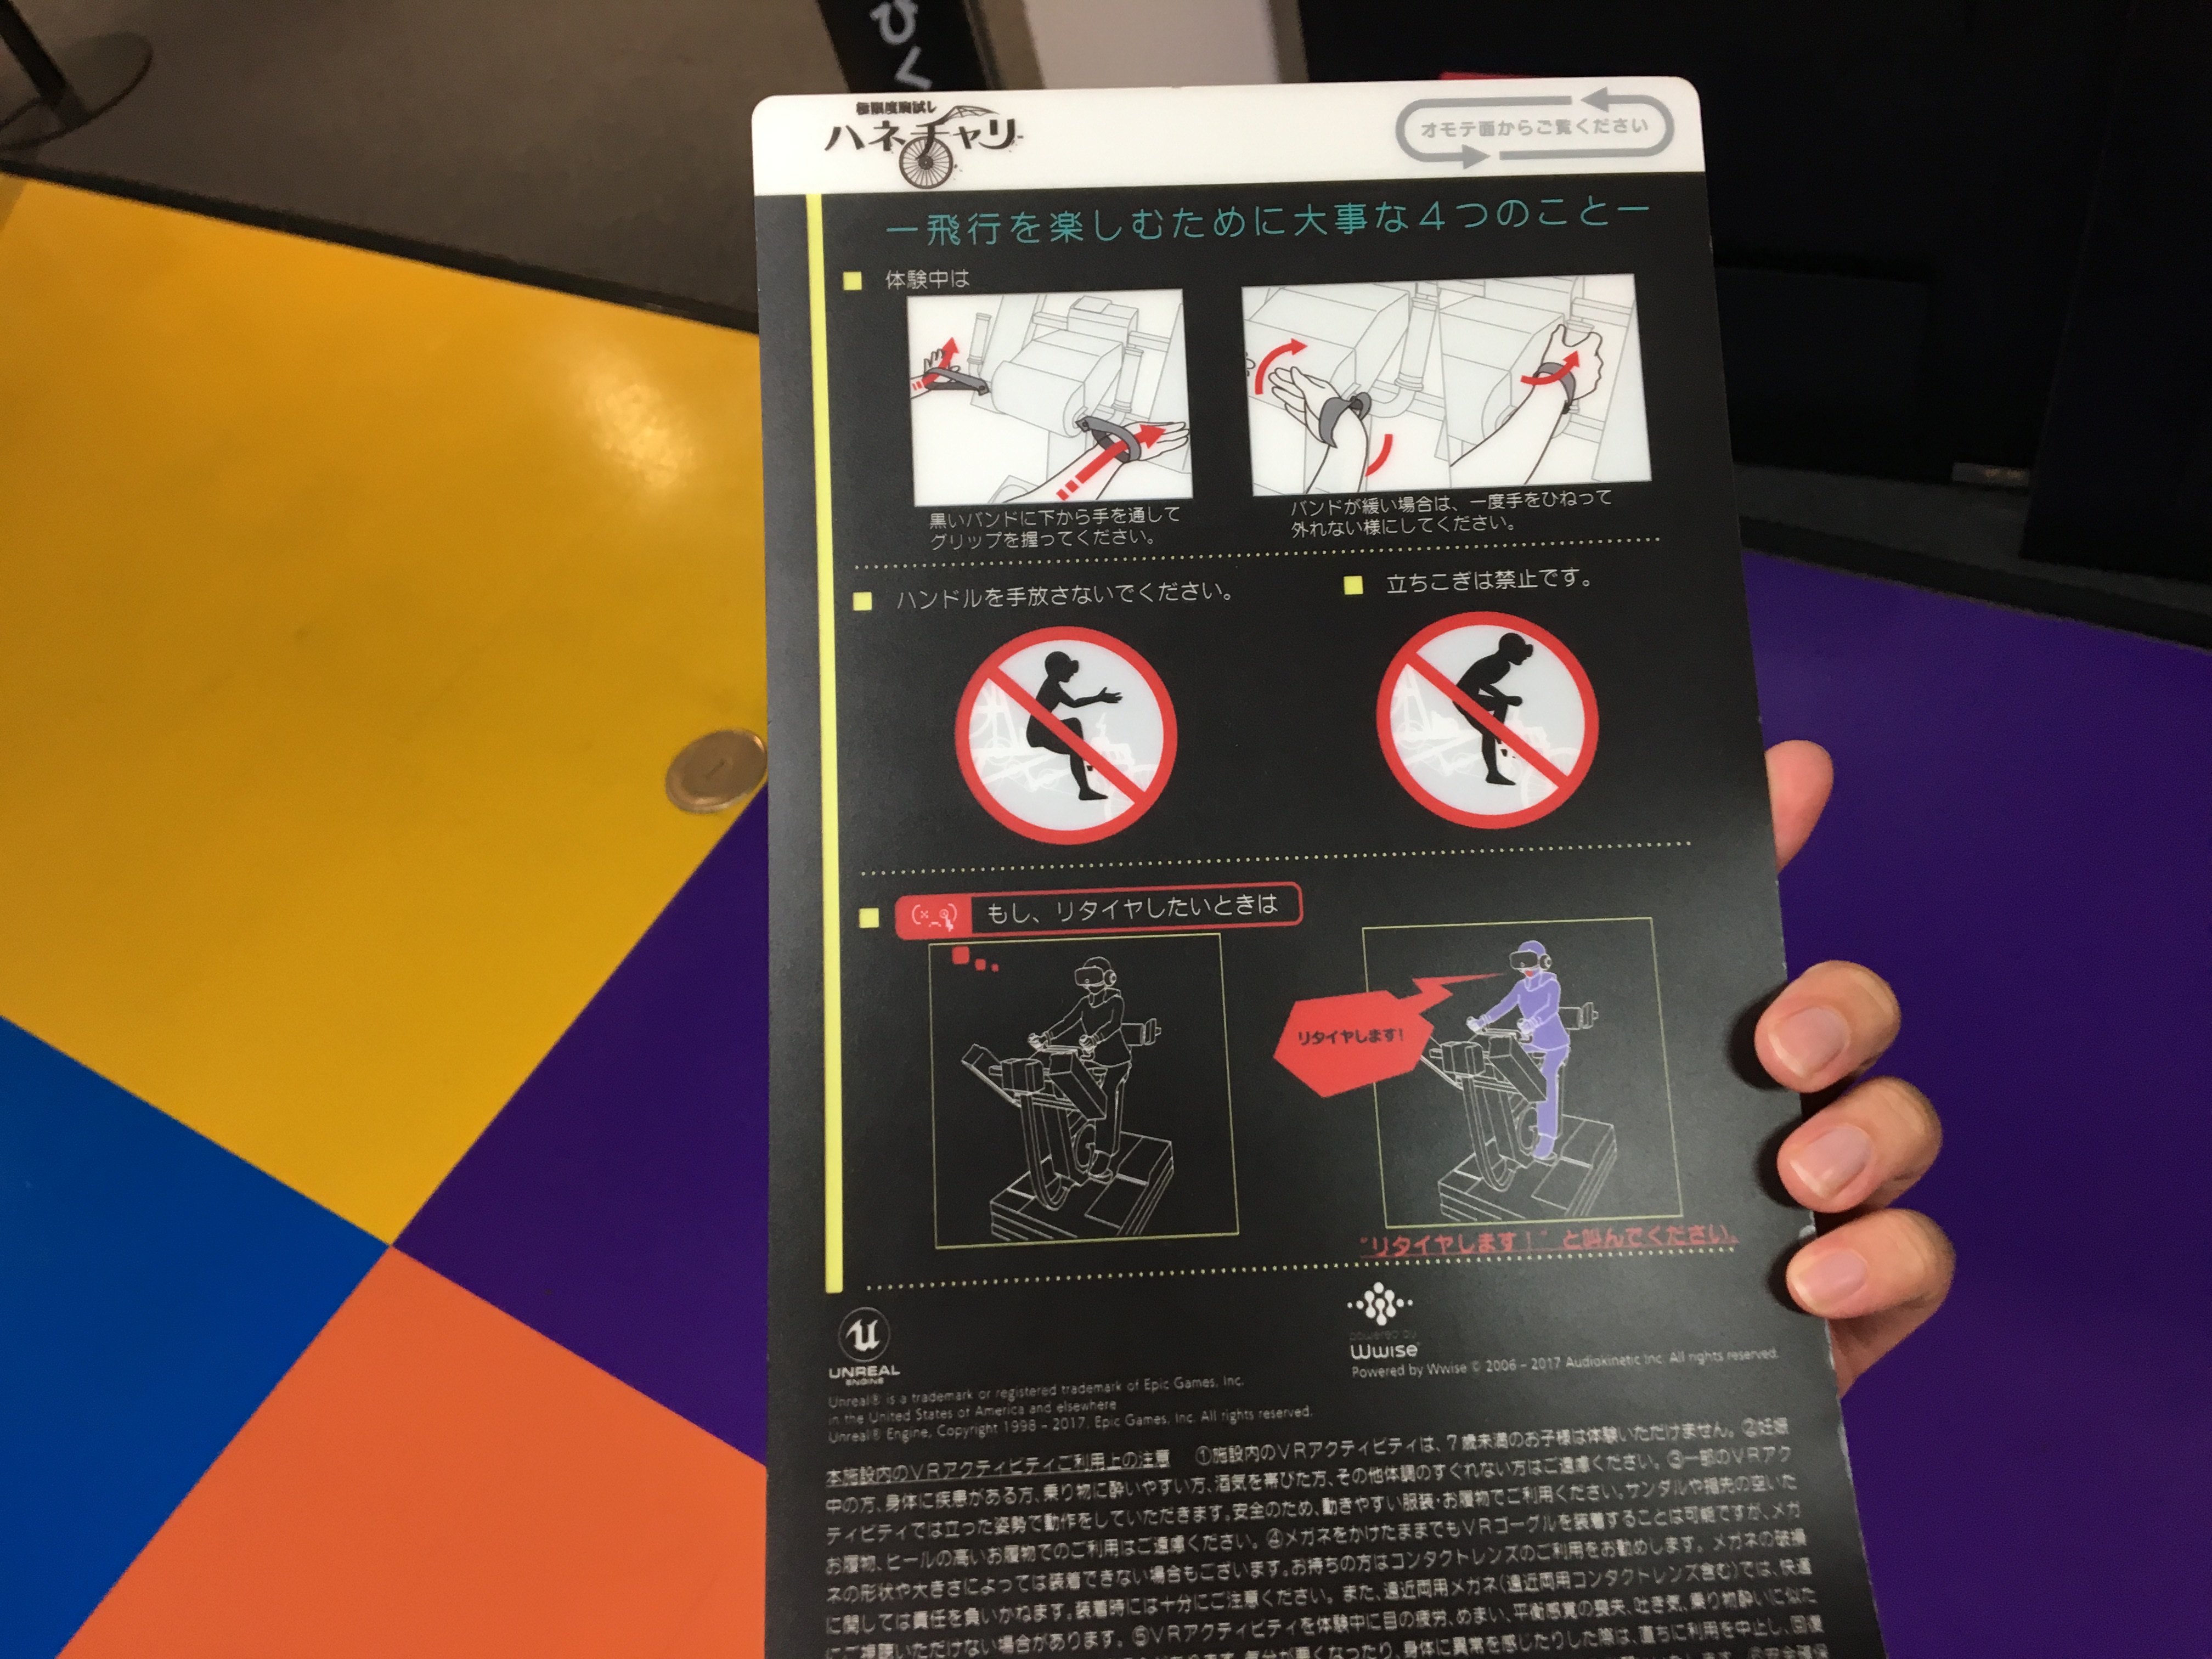 『VR ZONE Portal』namco札幌エスタ店で体験できるハネチャリの説明